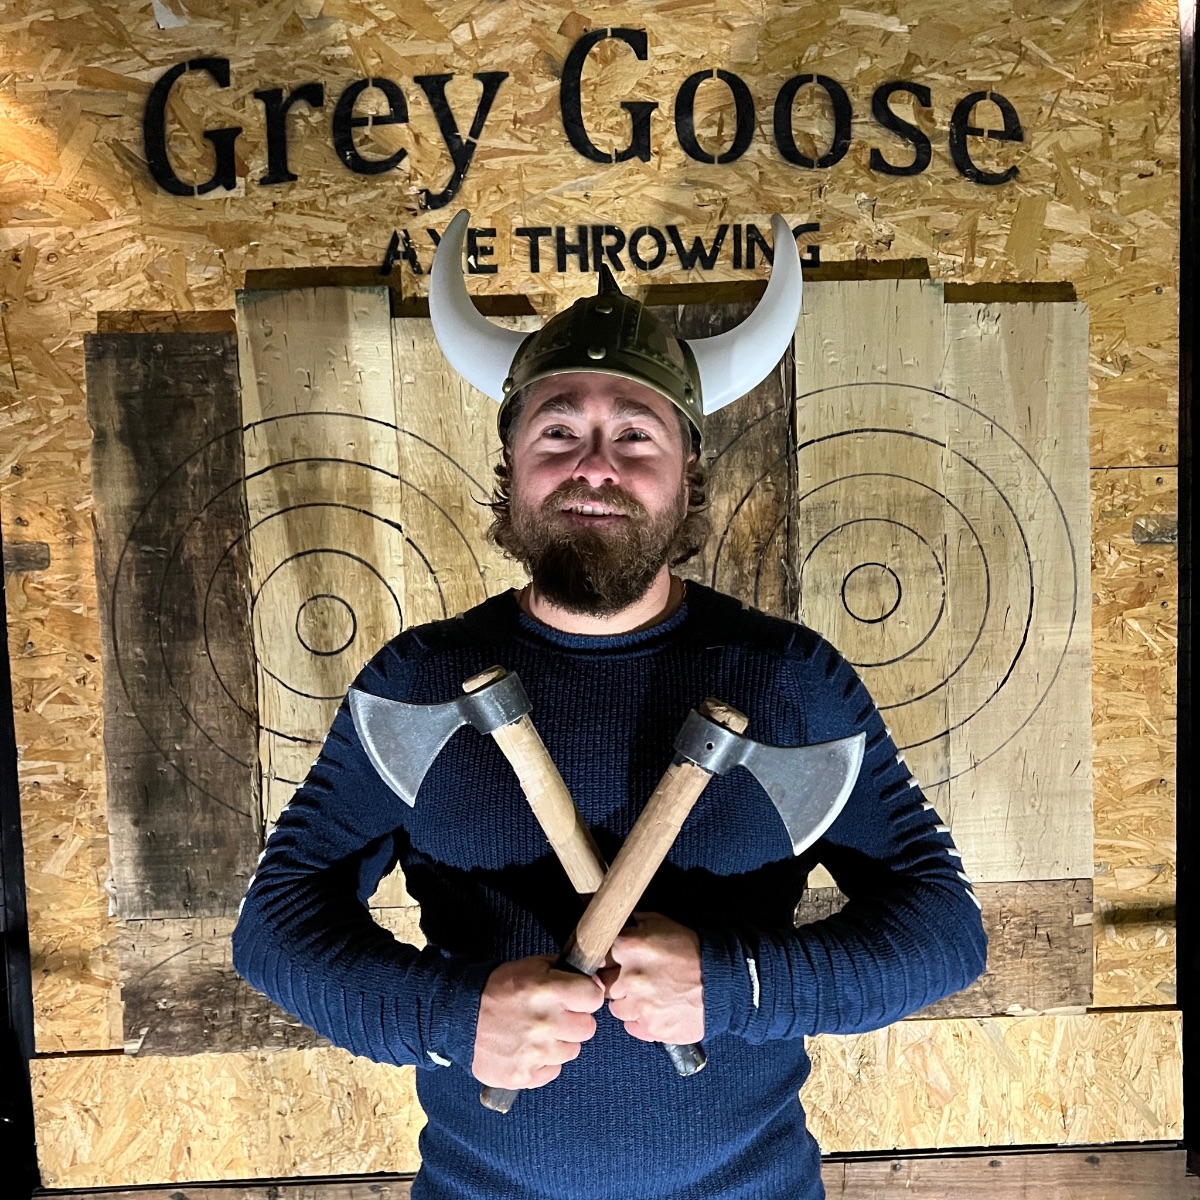 Grey Goose Axe Throwing -Image-19